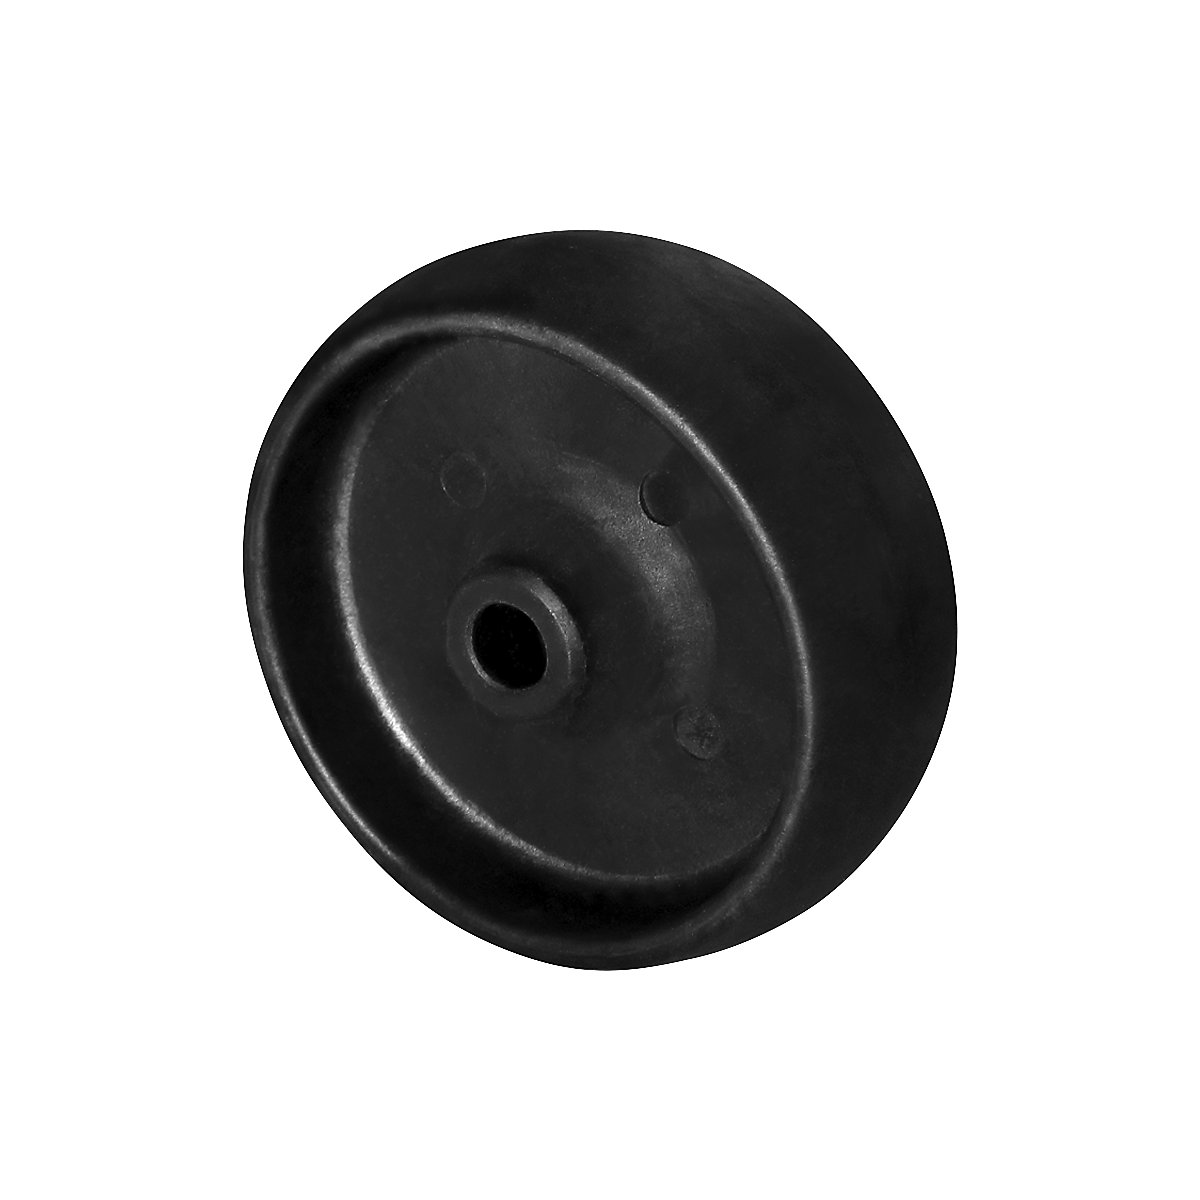 Poliamidni kotač od plastike ojačane staklenim vlaknima, klizni ležaj od nehrđajućeg čelika, od 2 kom., Ø x širina kotača 125 x 32 mm-2